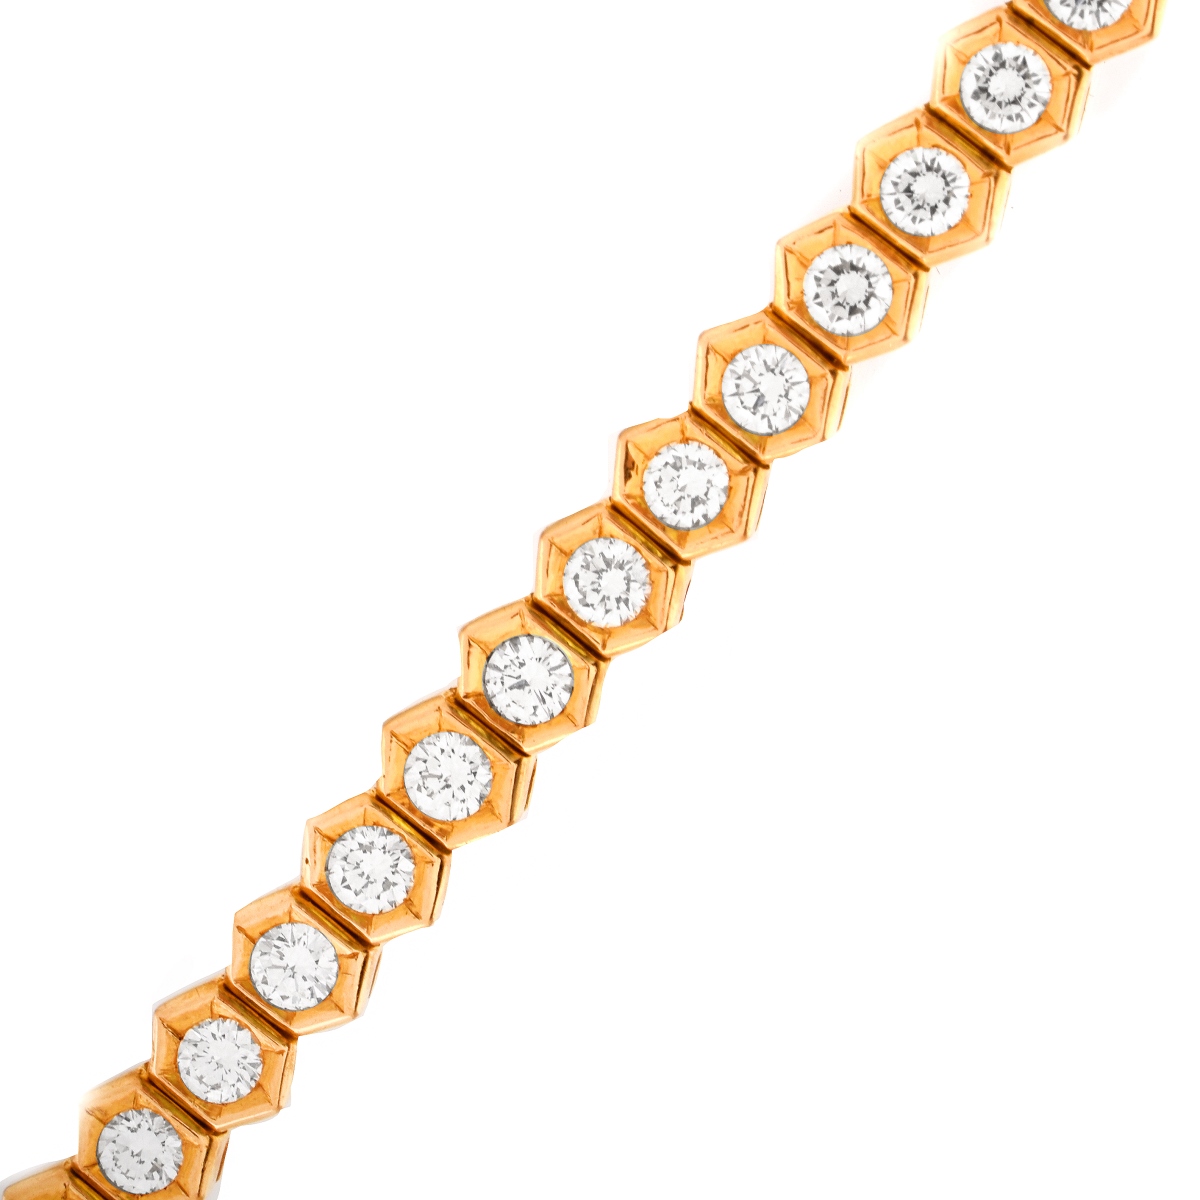 Diamond and 18K Line Bracelet